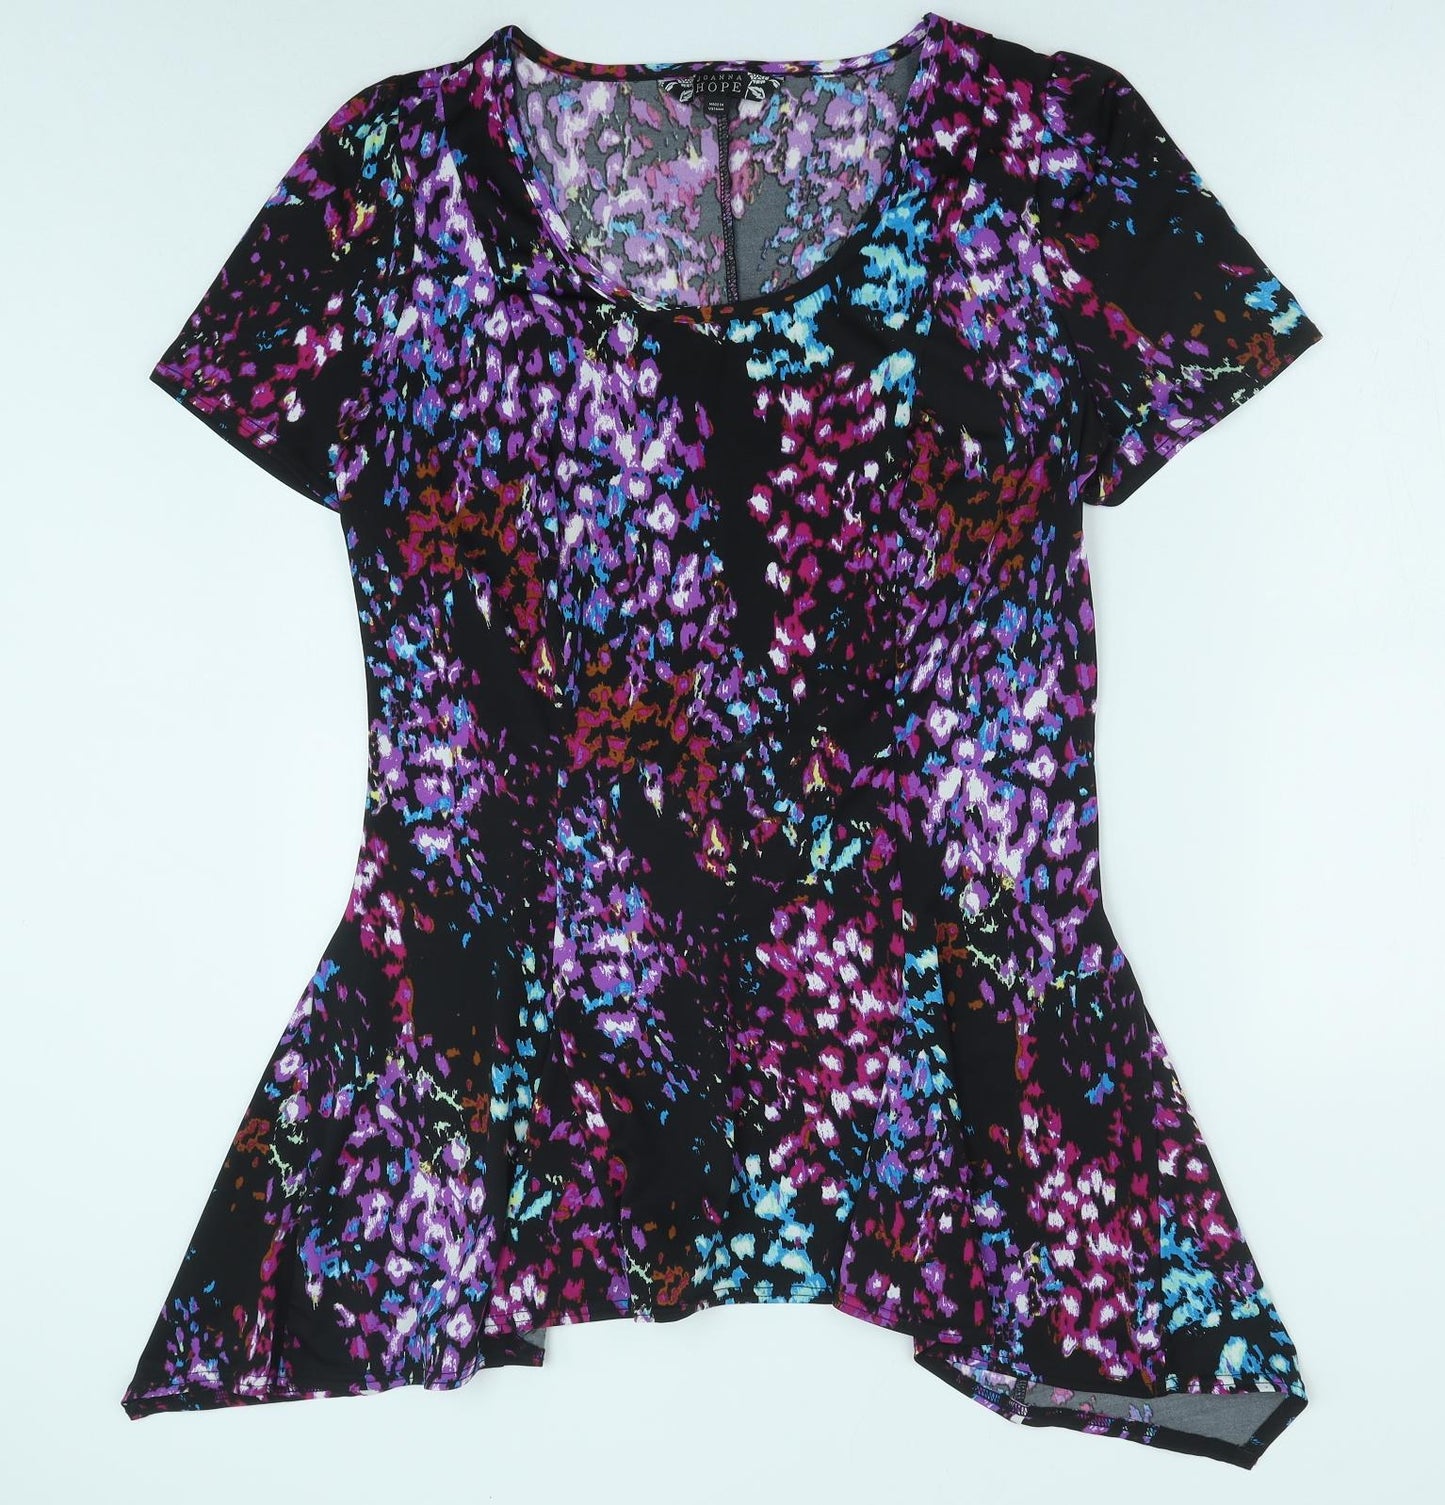 Joanna Hope Womens Purple Geometric Polyester Basic T-Shirt Size 14 Scoop Neck - Hanky Hem